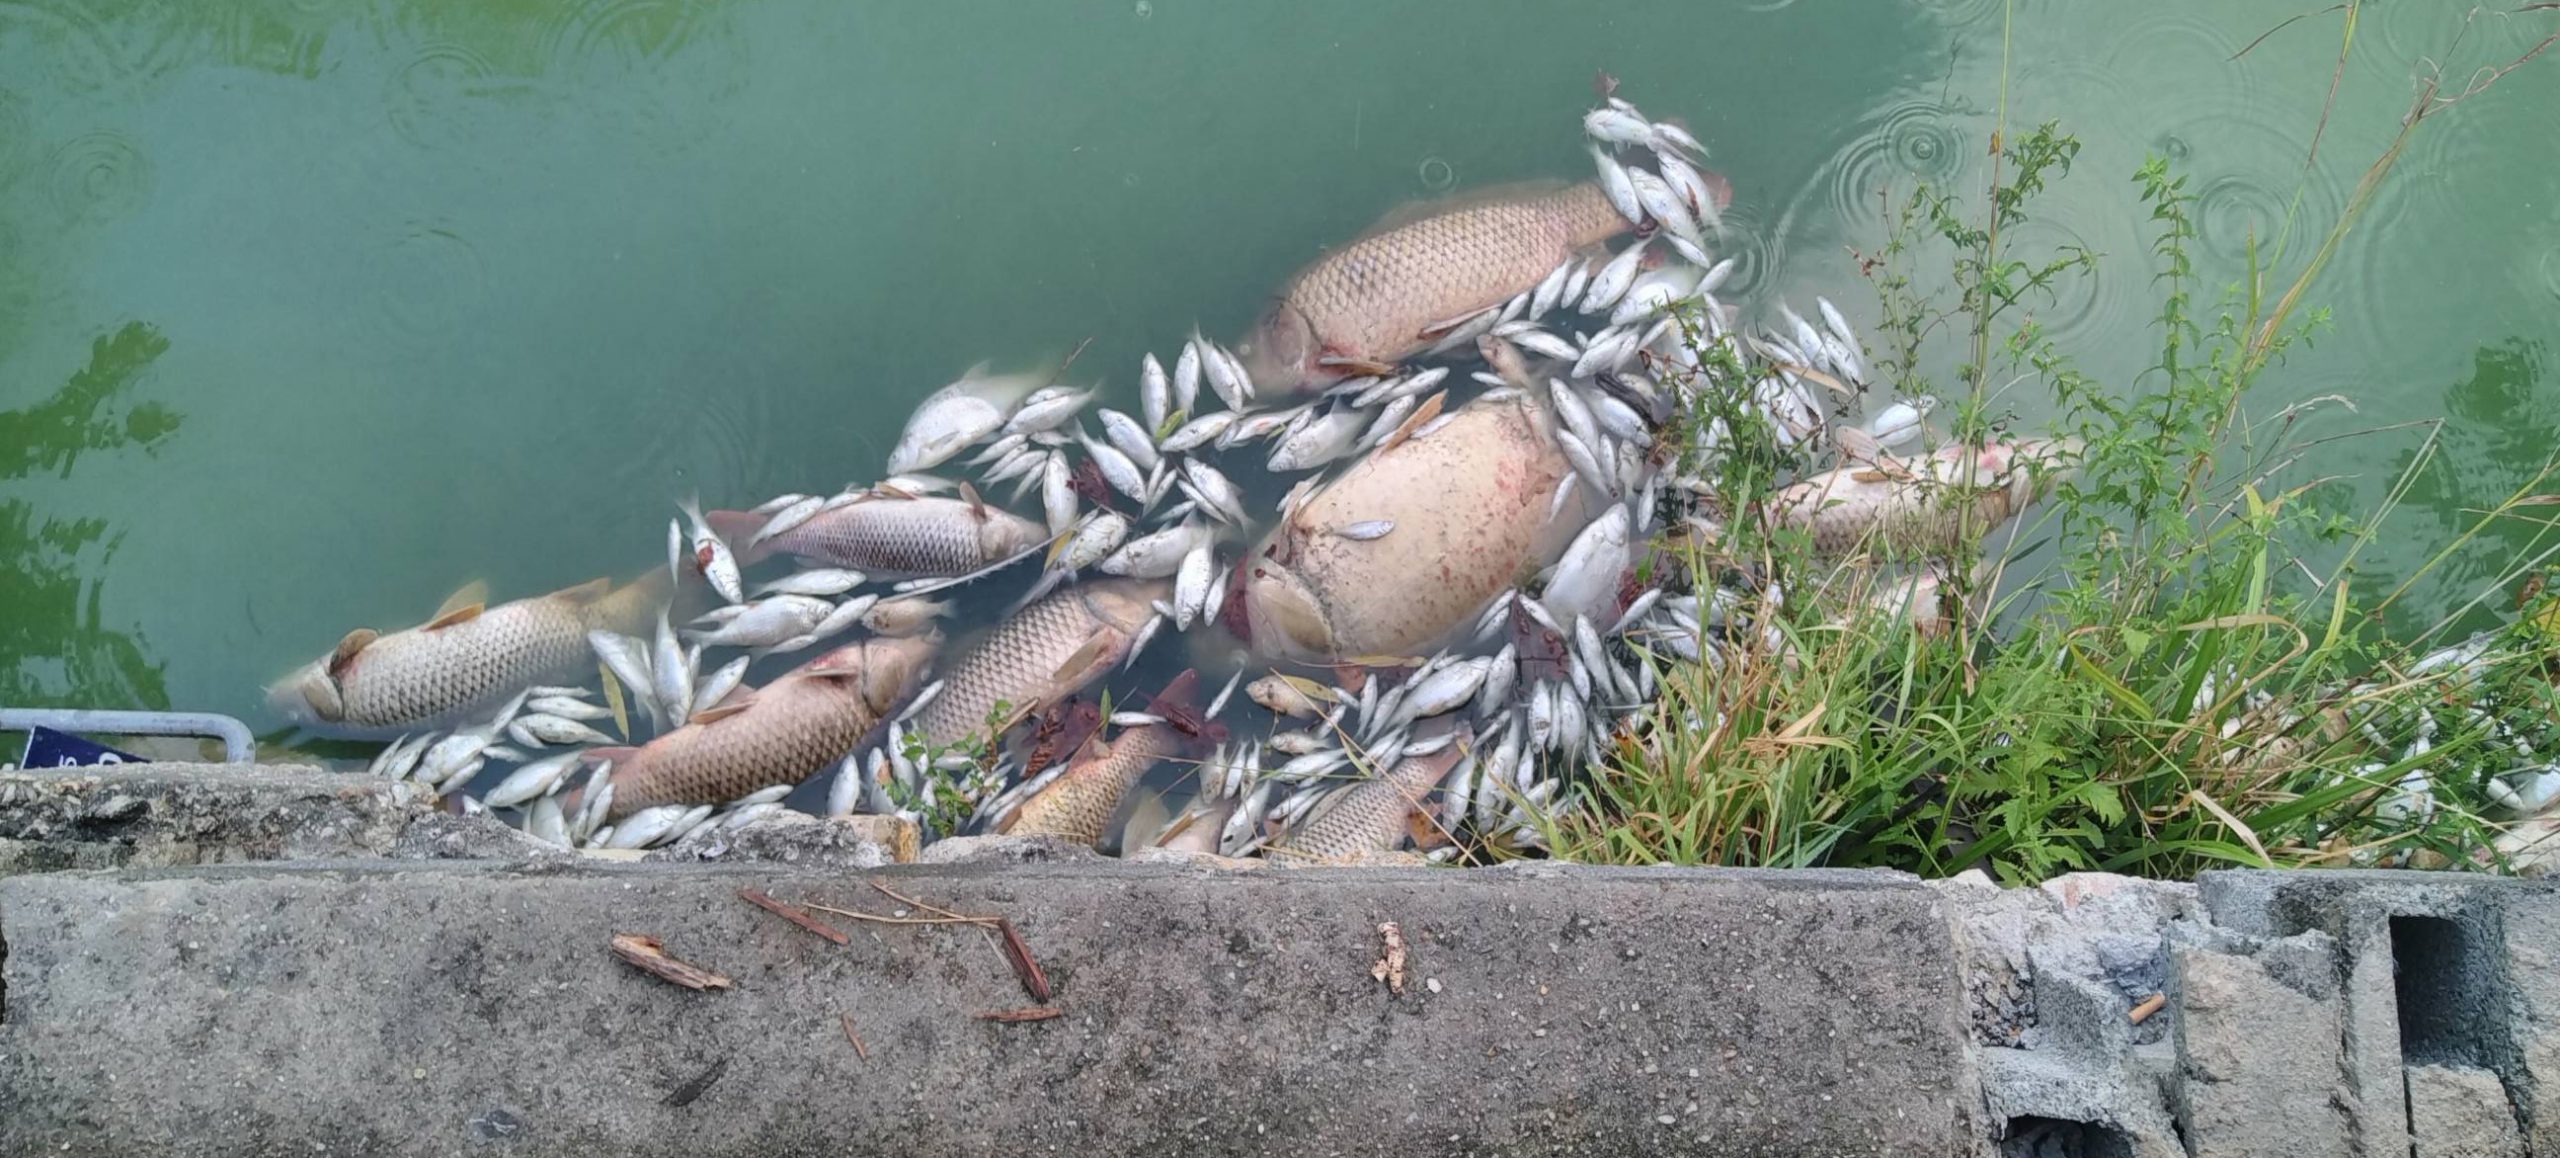 Photos de poissons morts